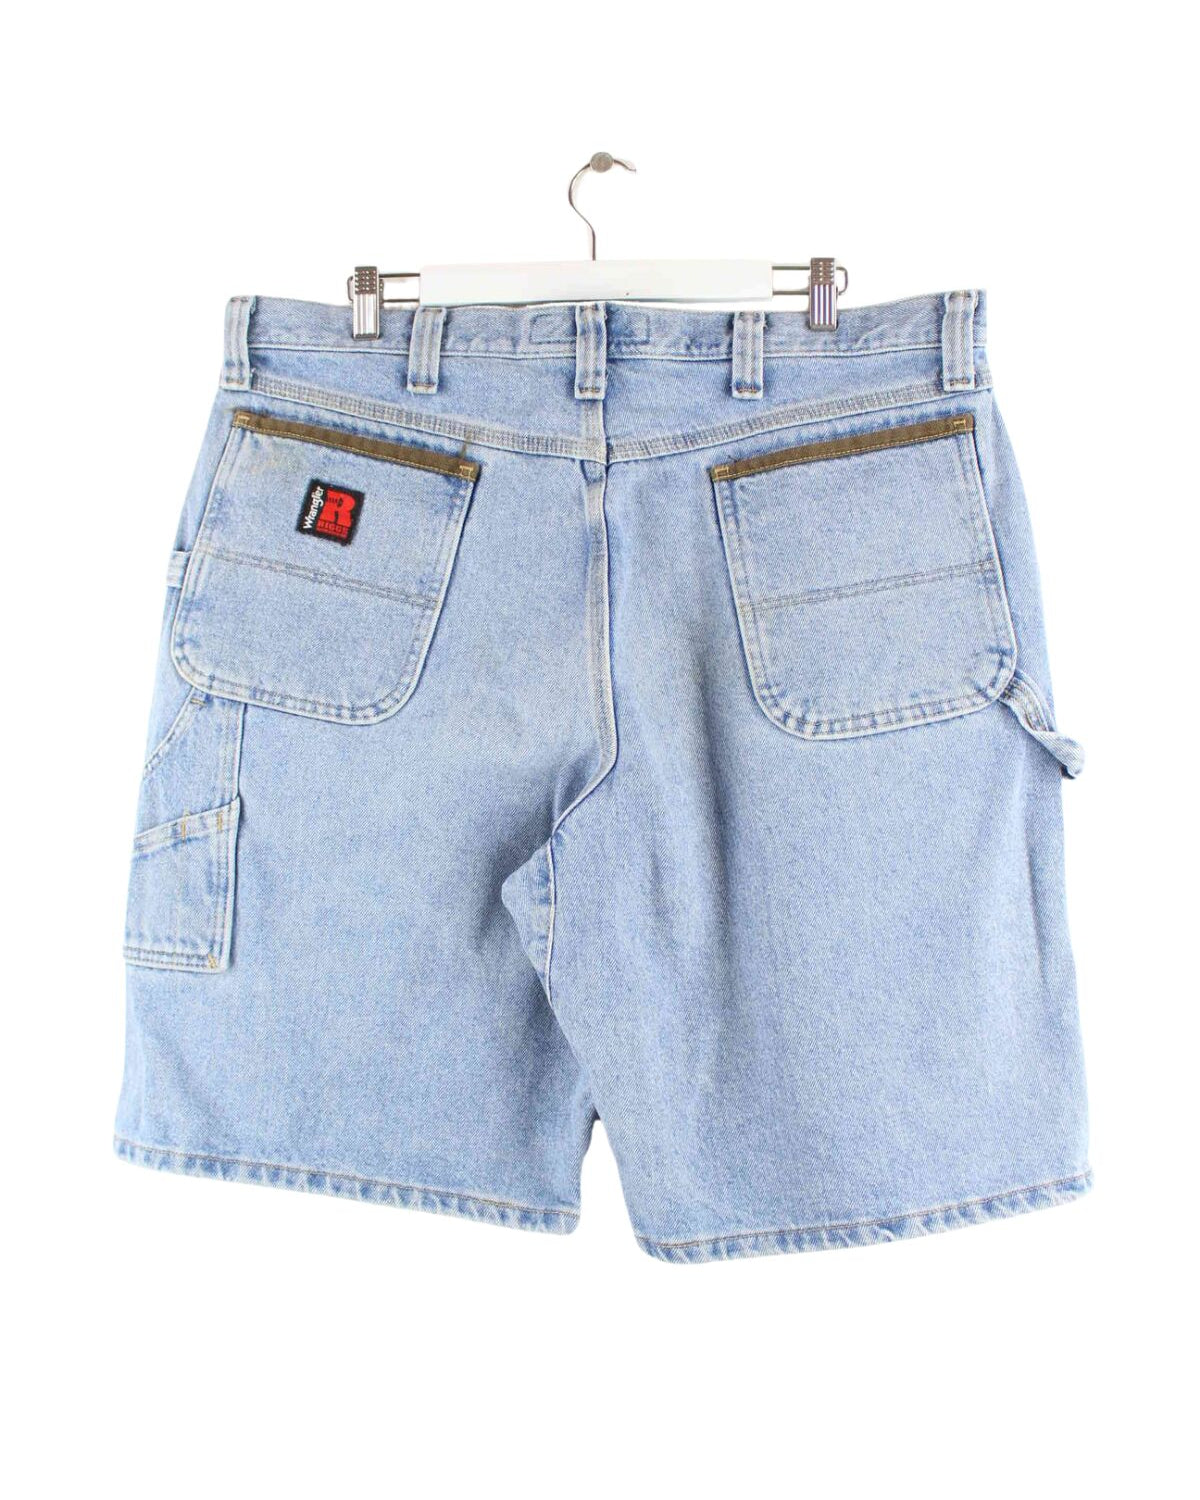 Wrangler Riggs Workwear Carpenter Shorts Blau  (back image)